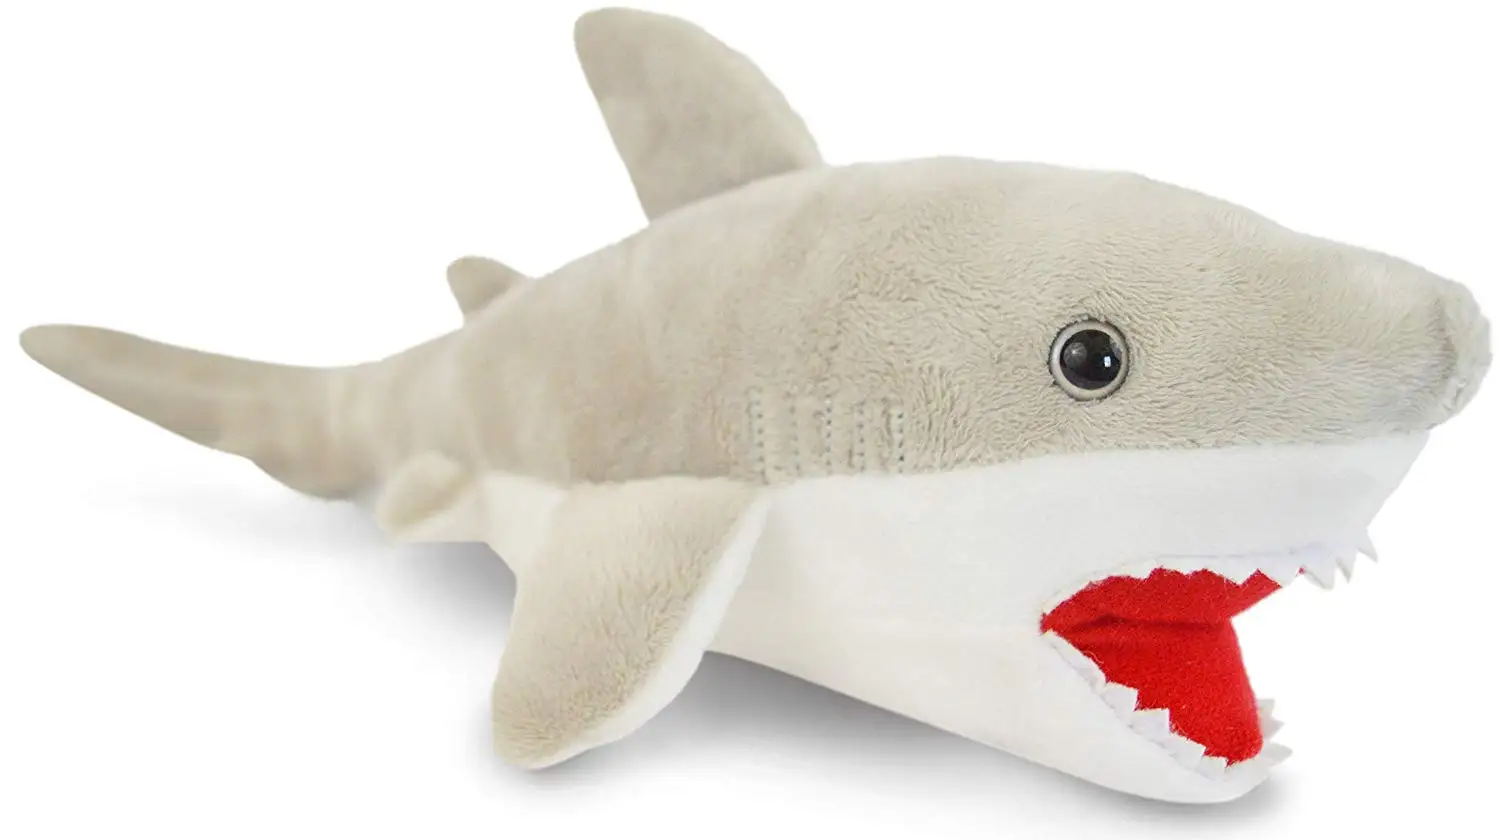 great white shark stuffed animal